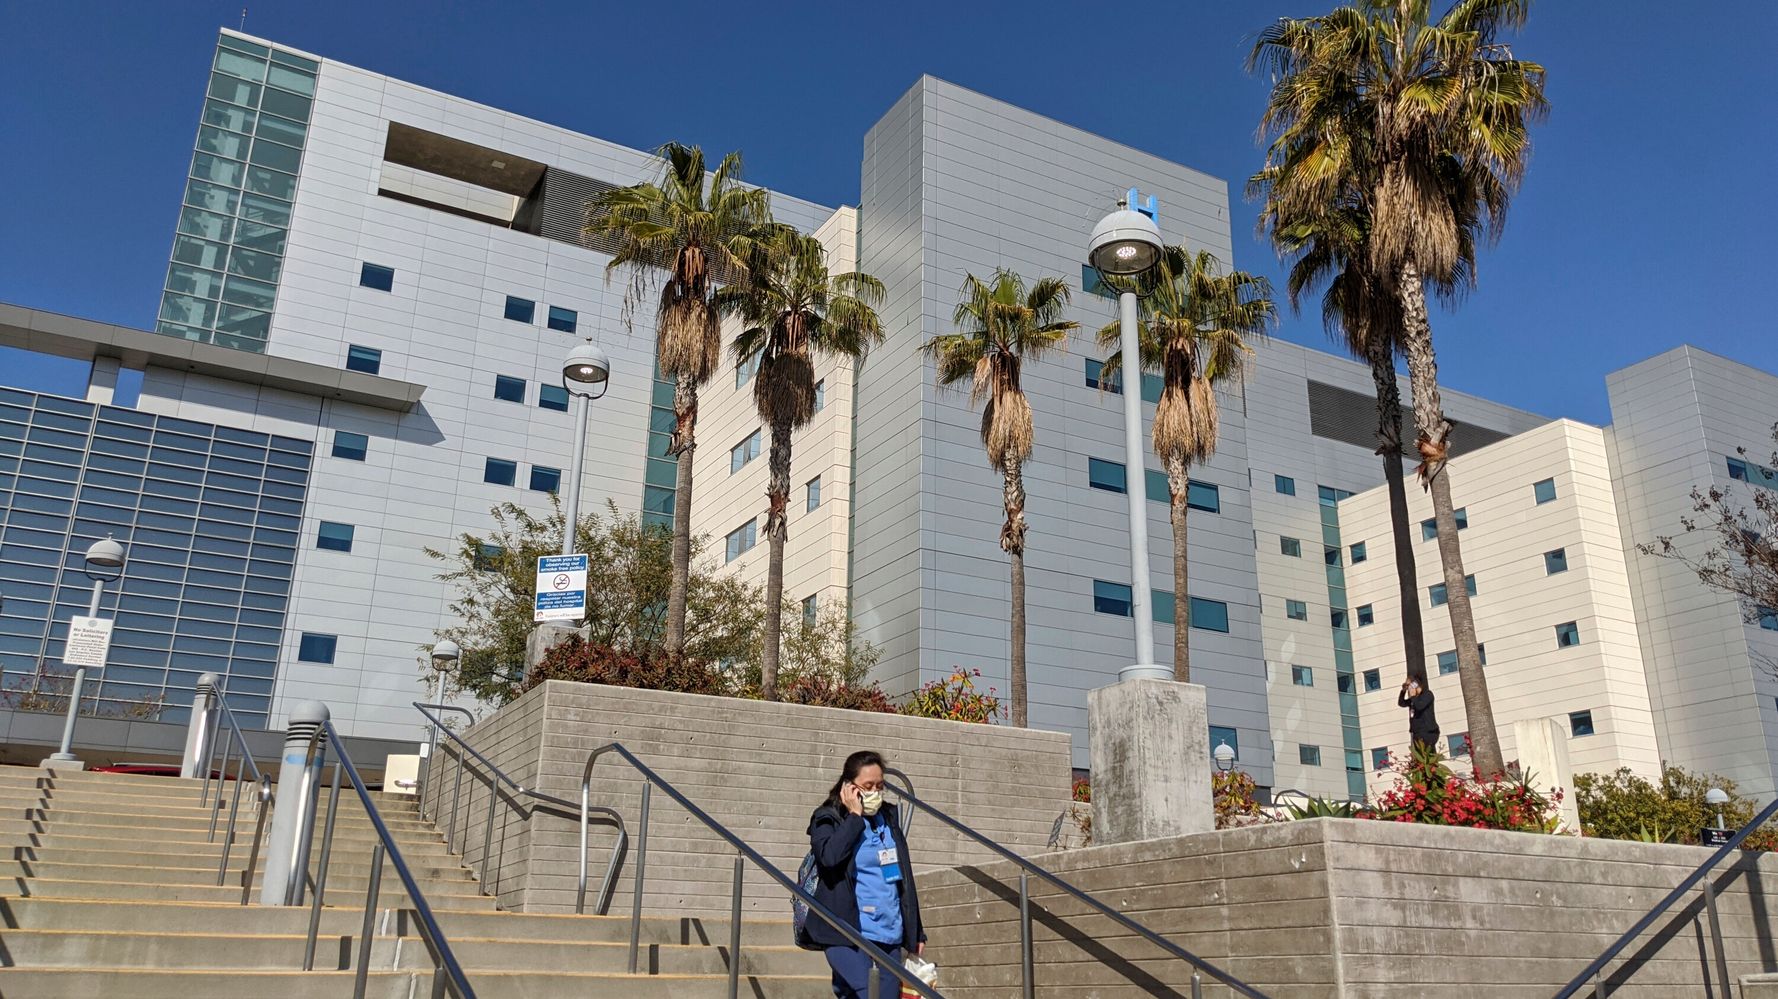 Los Angeles County School Of Nursing And Allied Health School Walls